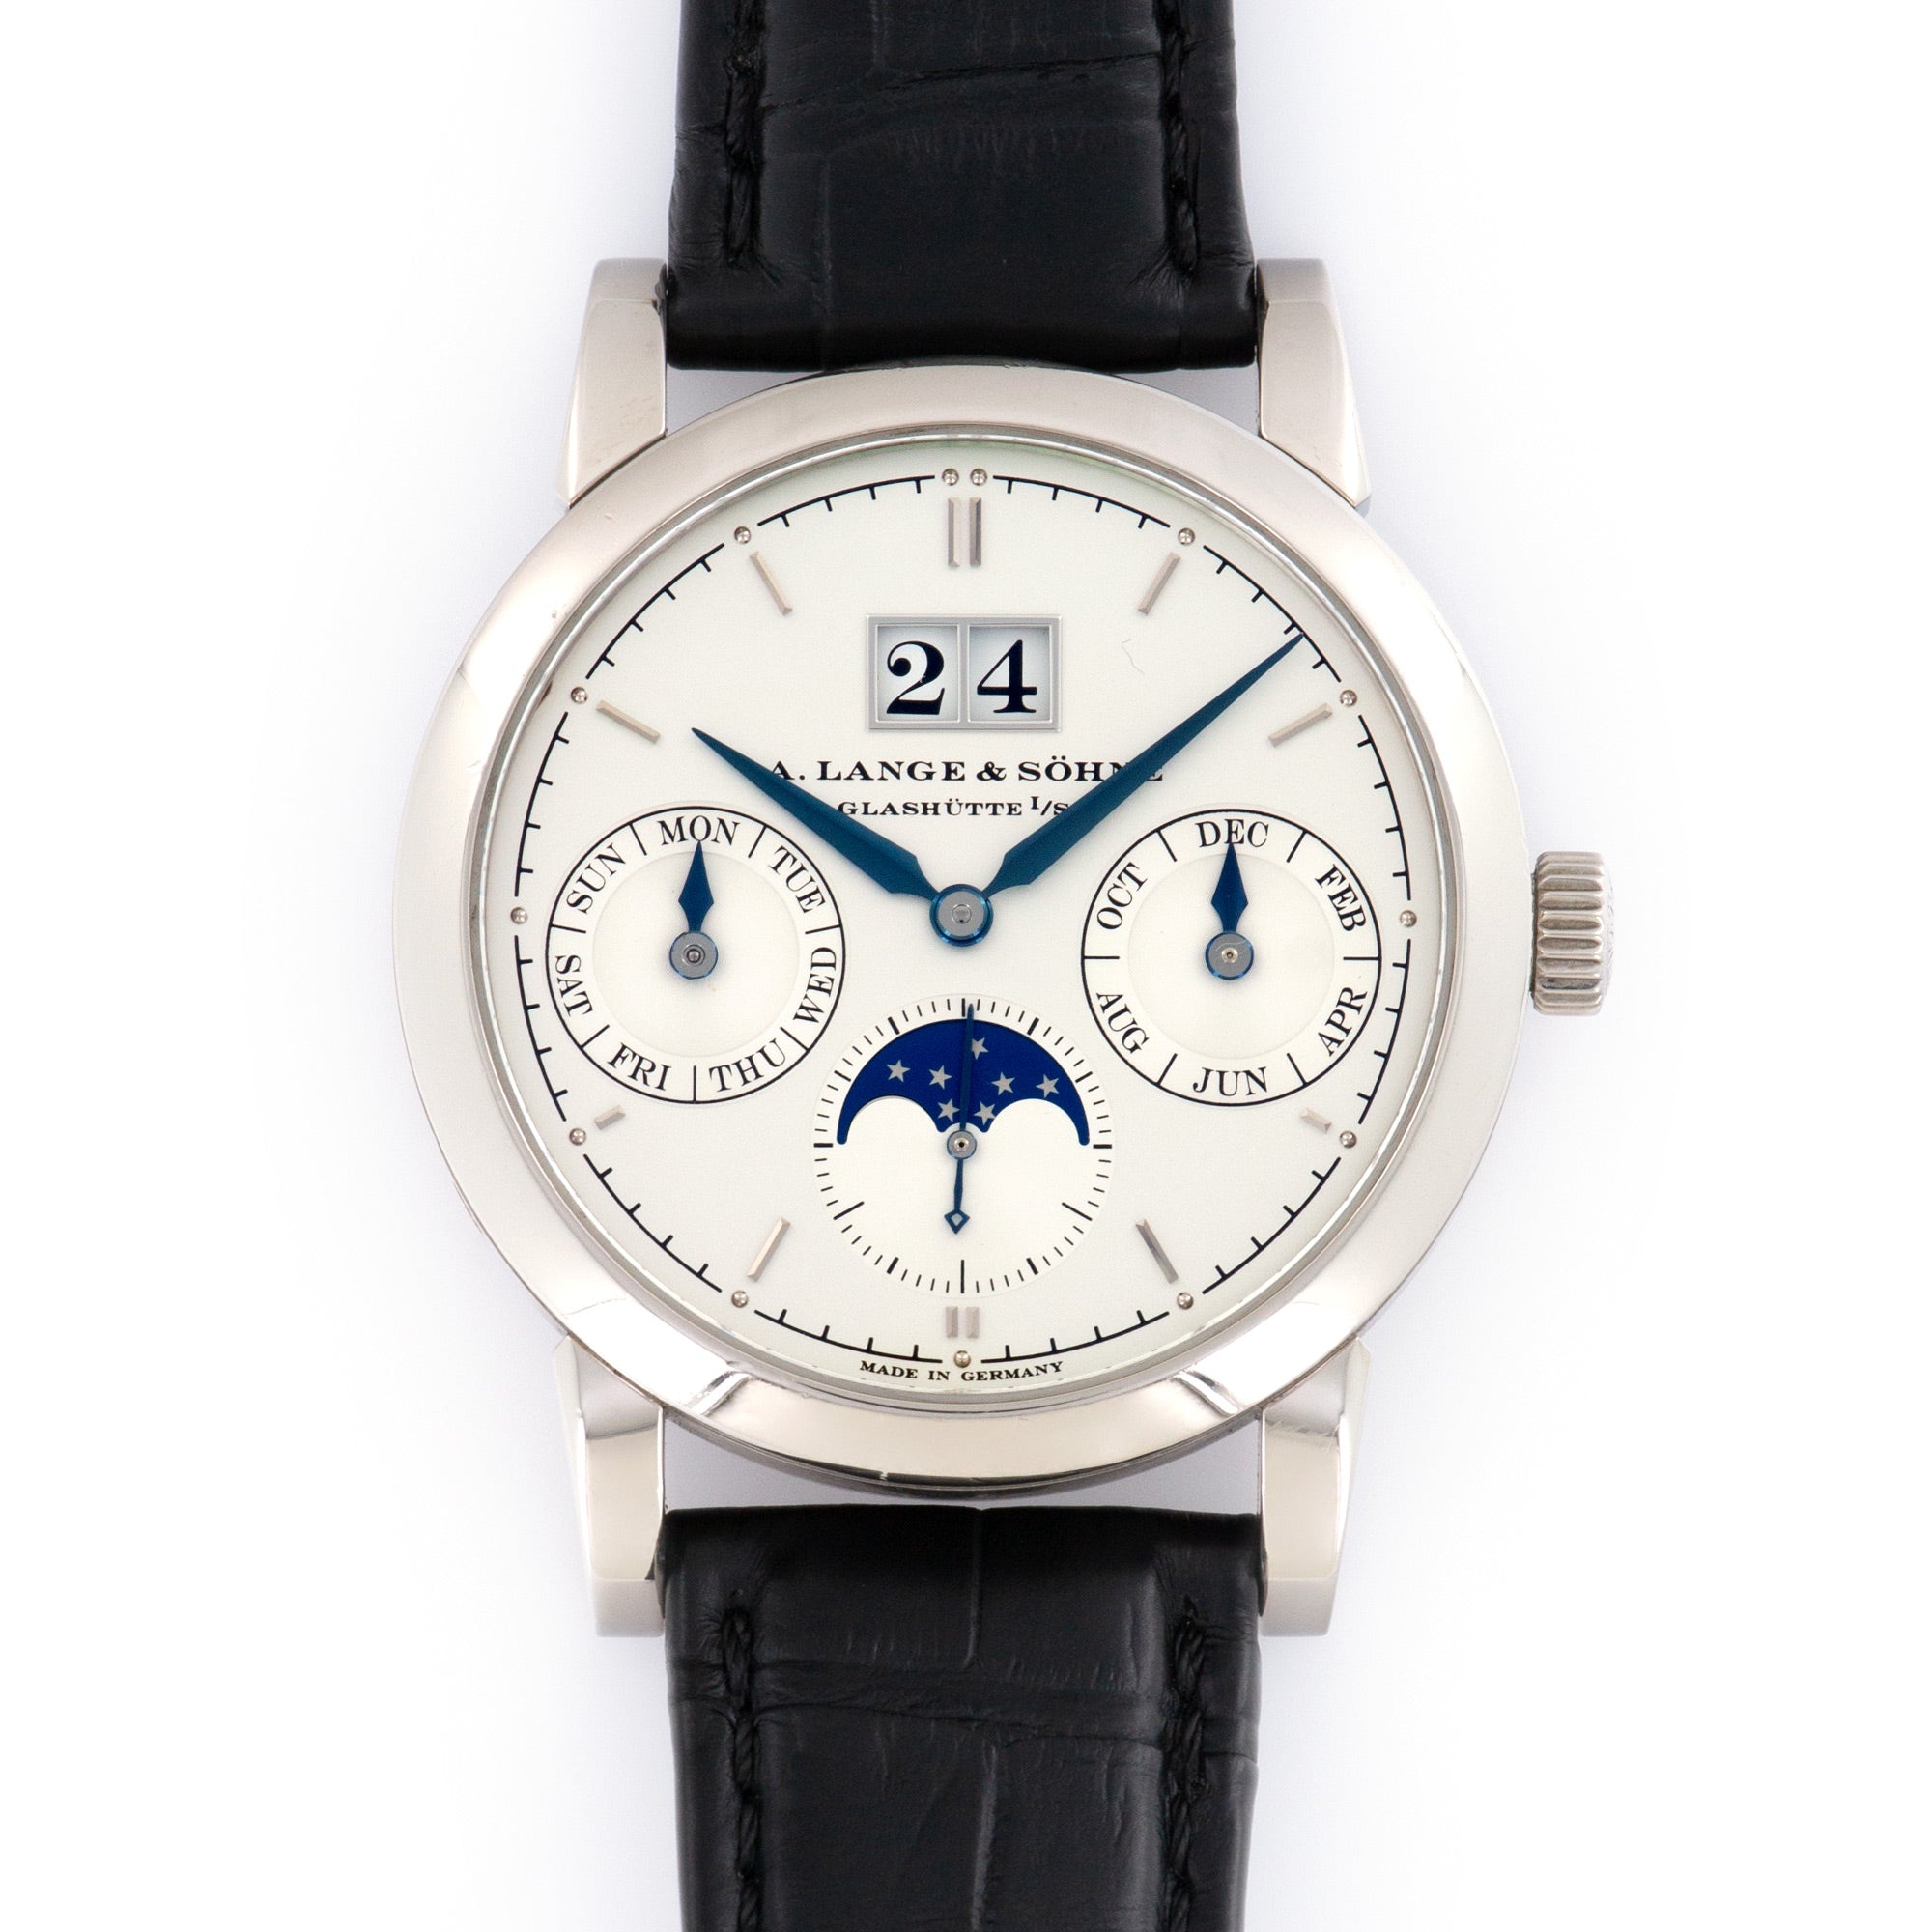 A. Lange & Sohne - A. Lange & Sohne Saxonia Annual Calendar Watch, Ref. 330.026 - The Keystone Watches